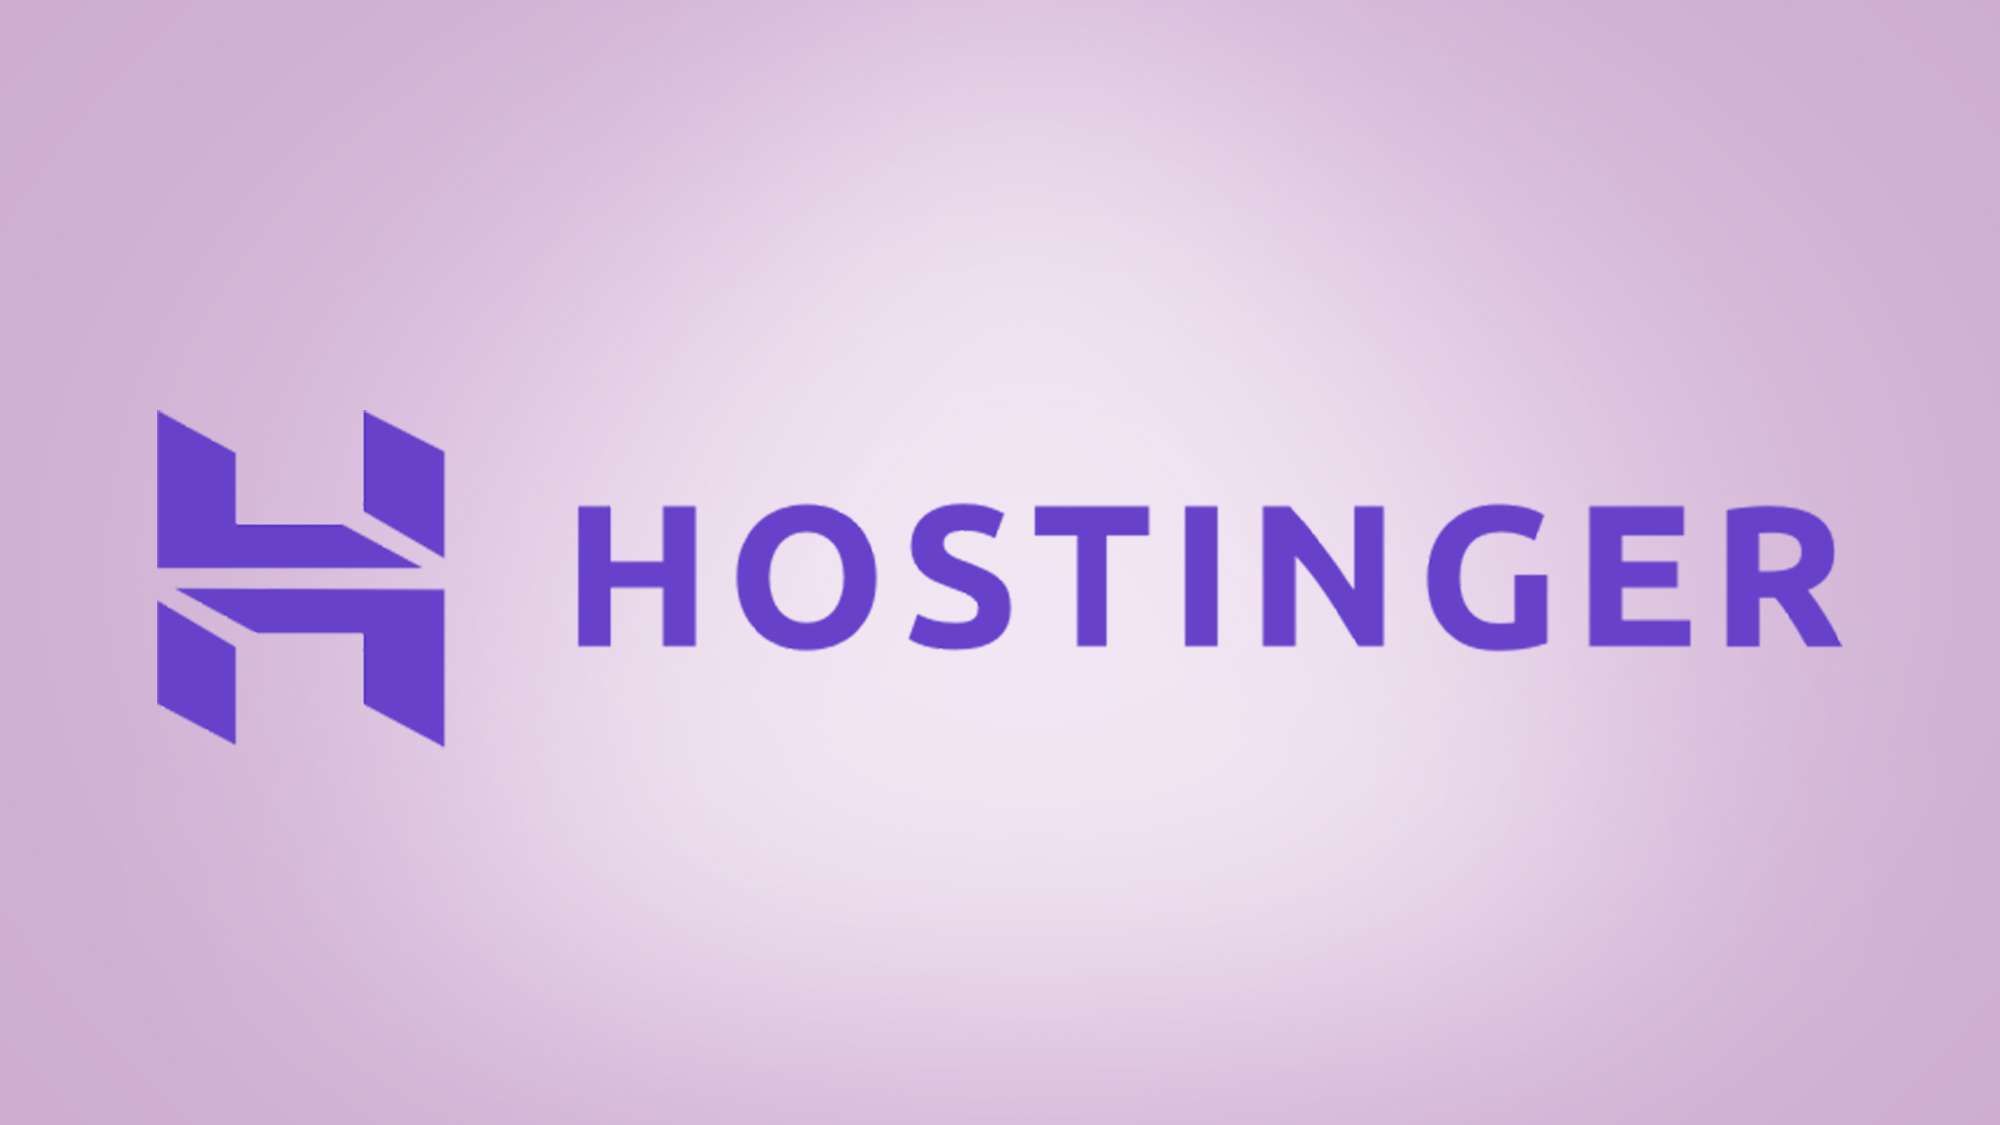 Hostinger logo on bright purple background with spotlight effect